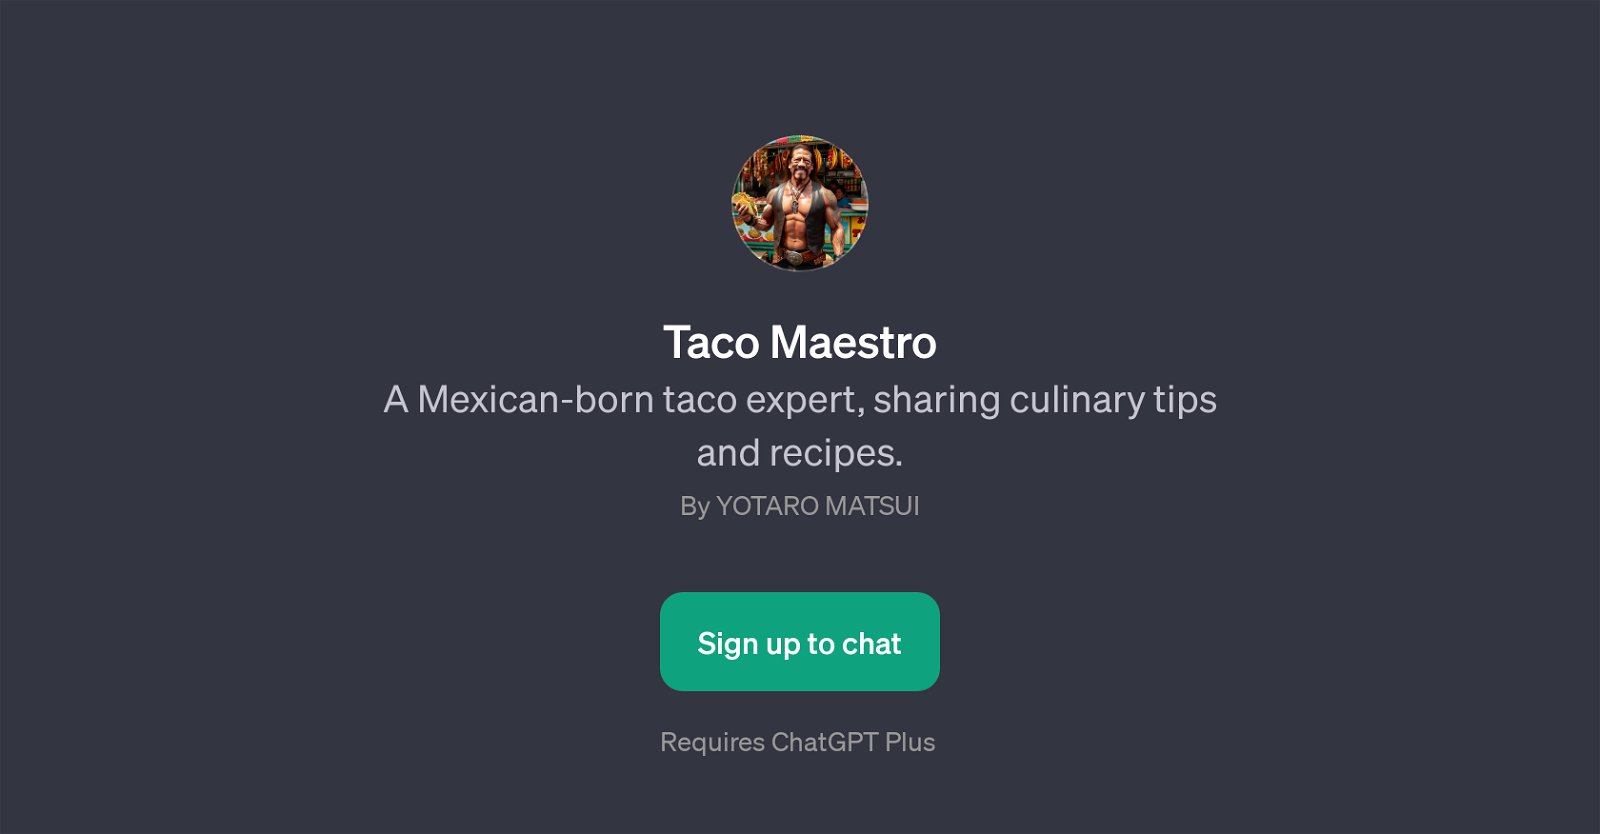 Taco Maestro website